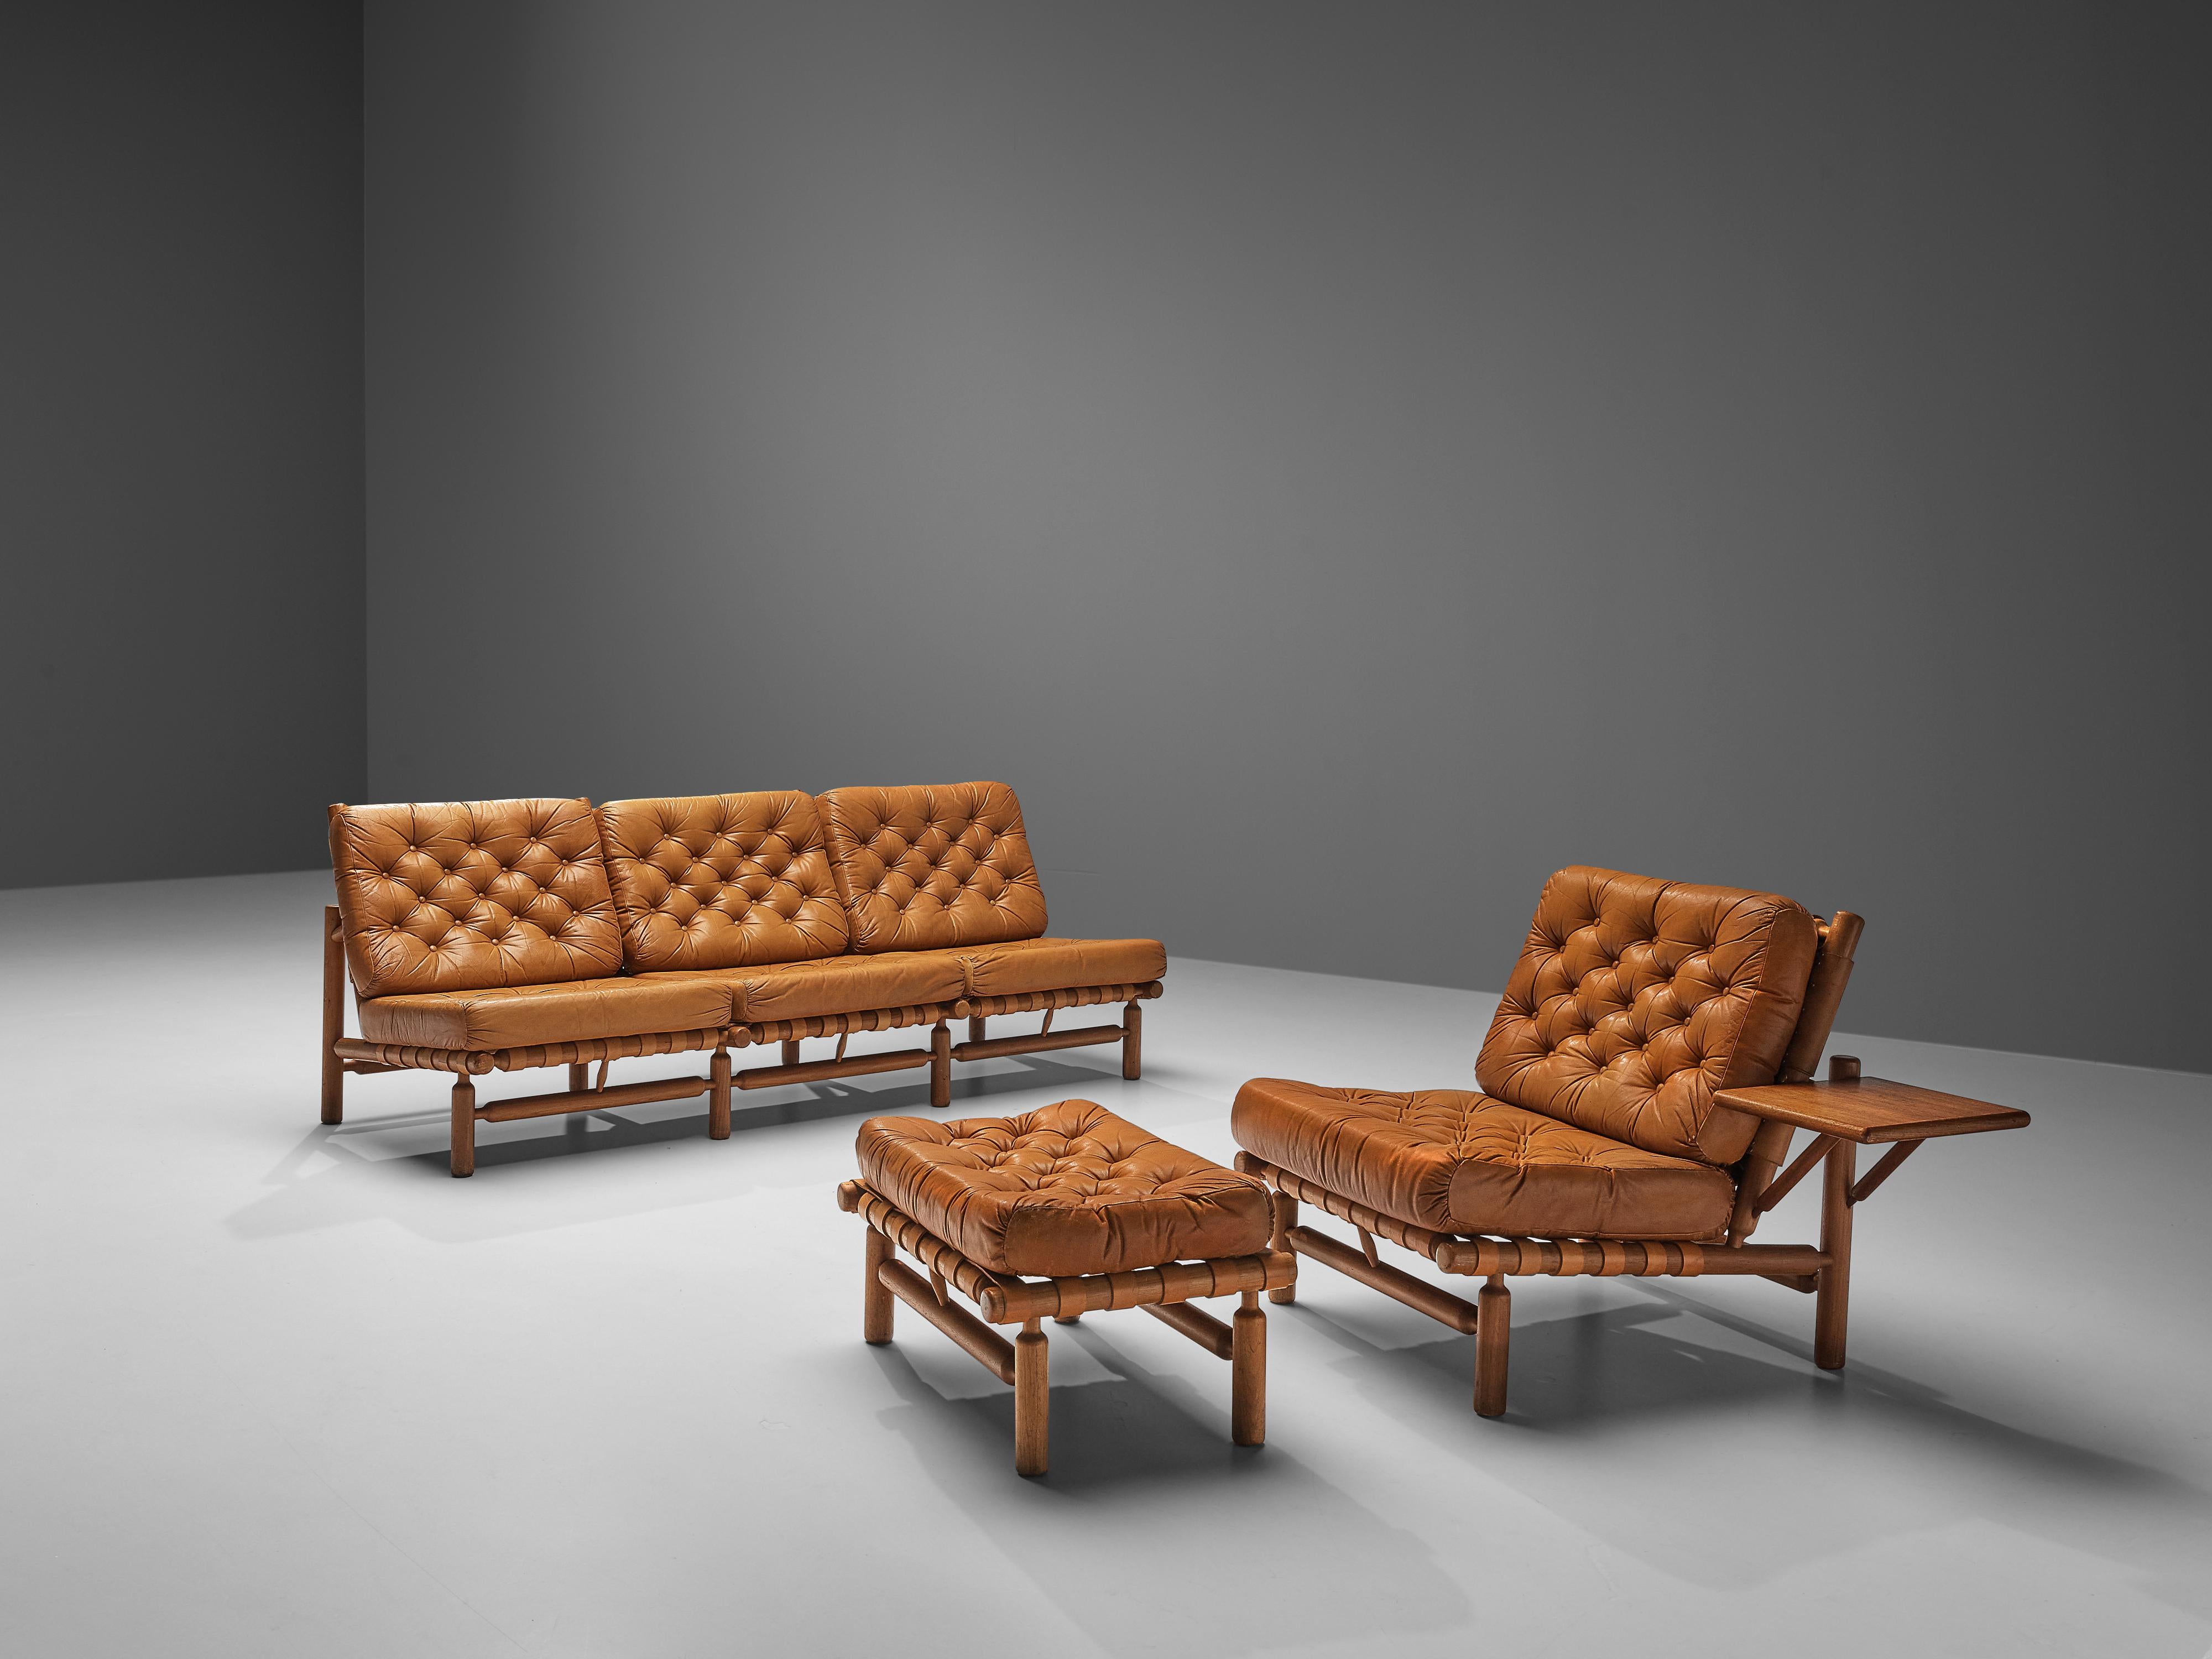 Finnish Ilmari Tapiovaara Sectional Sofa and Ottoman in Cognac Leather